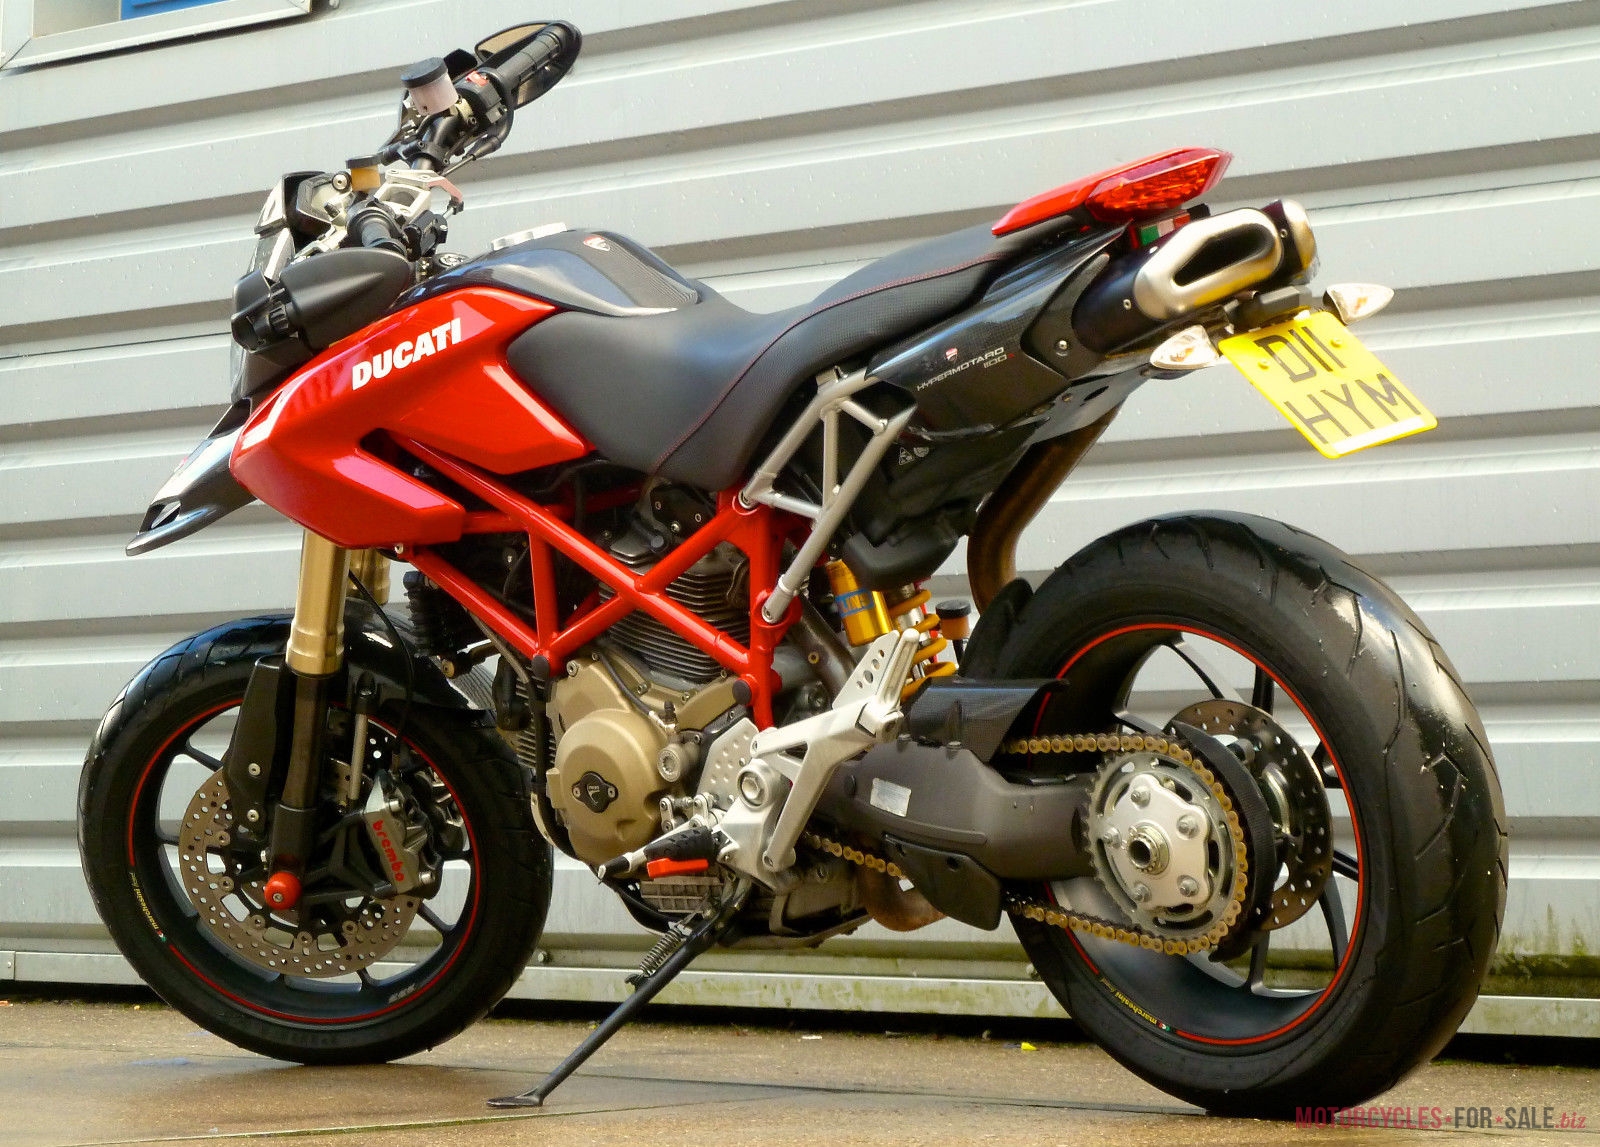 Ducati hypermotard 1100 (2007 - 2012) review